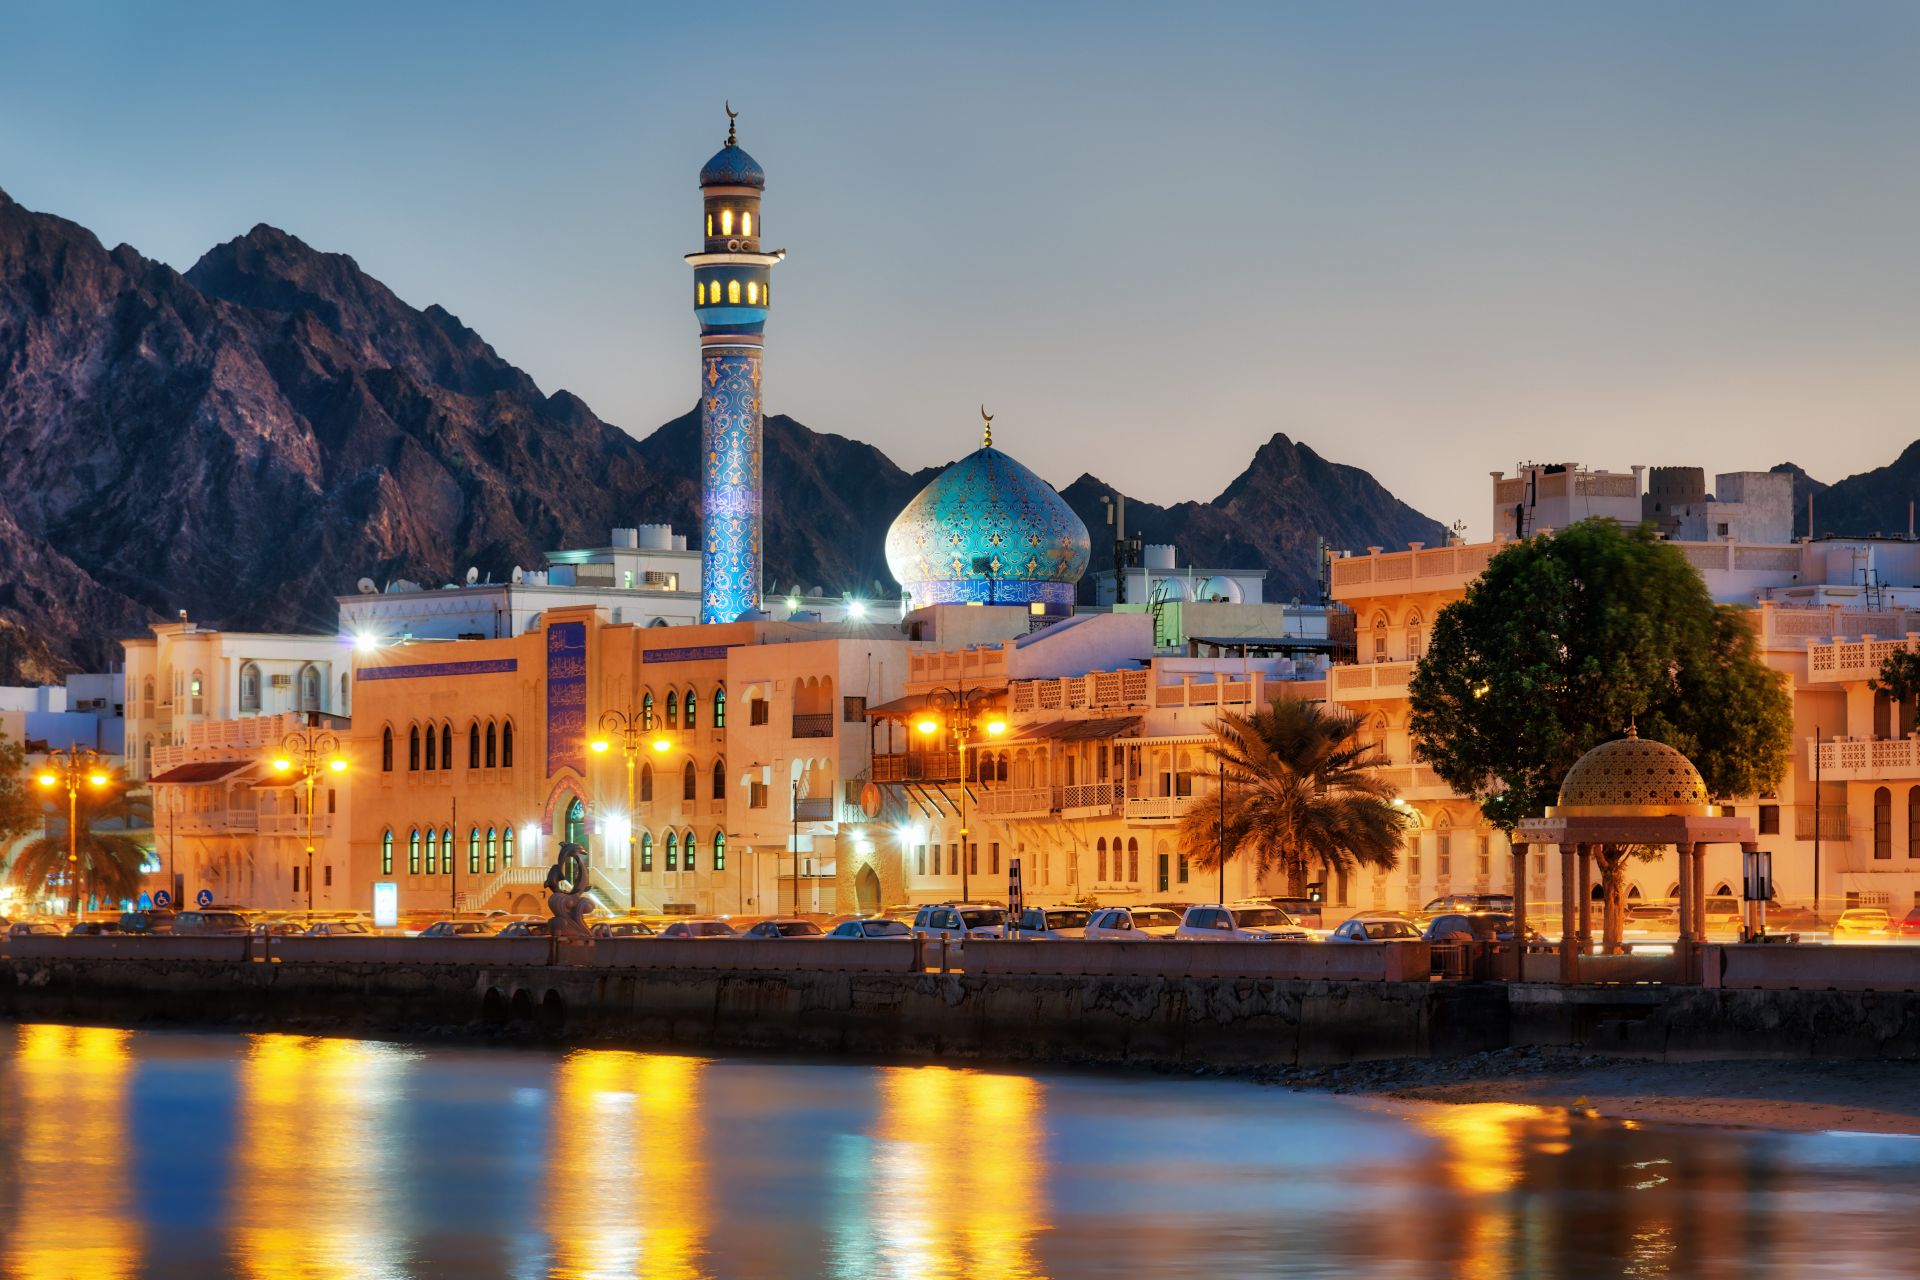 Corniche Muttrah, Muscat, Oman